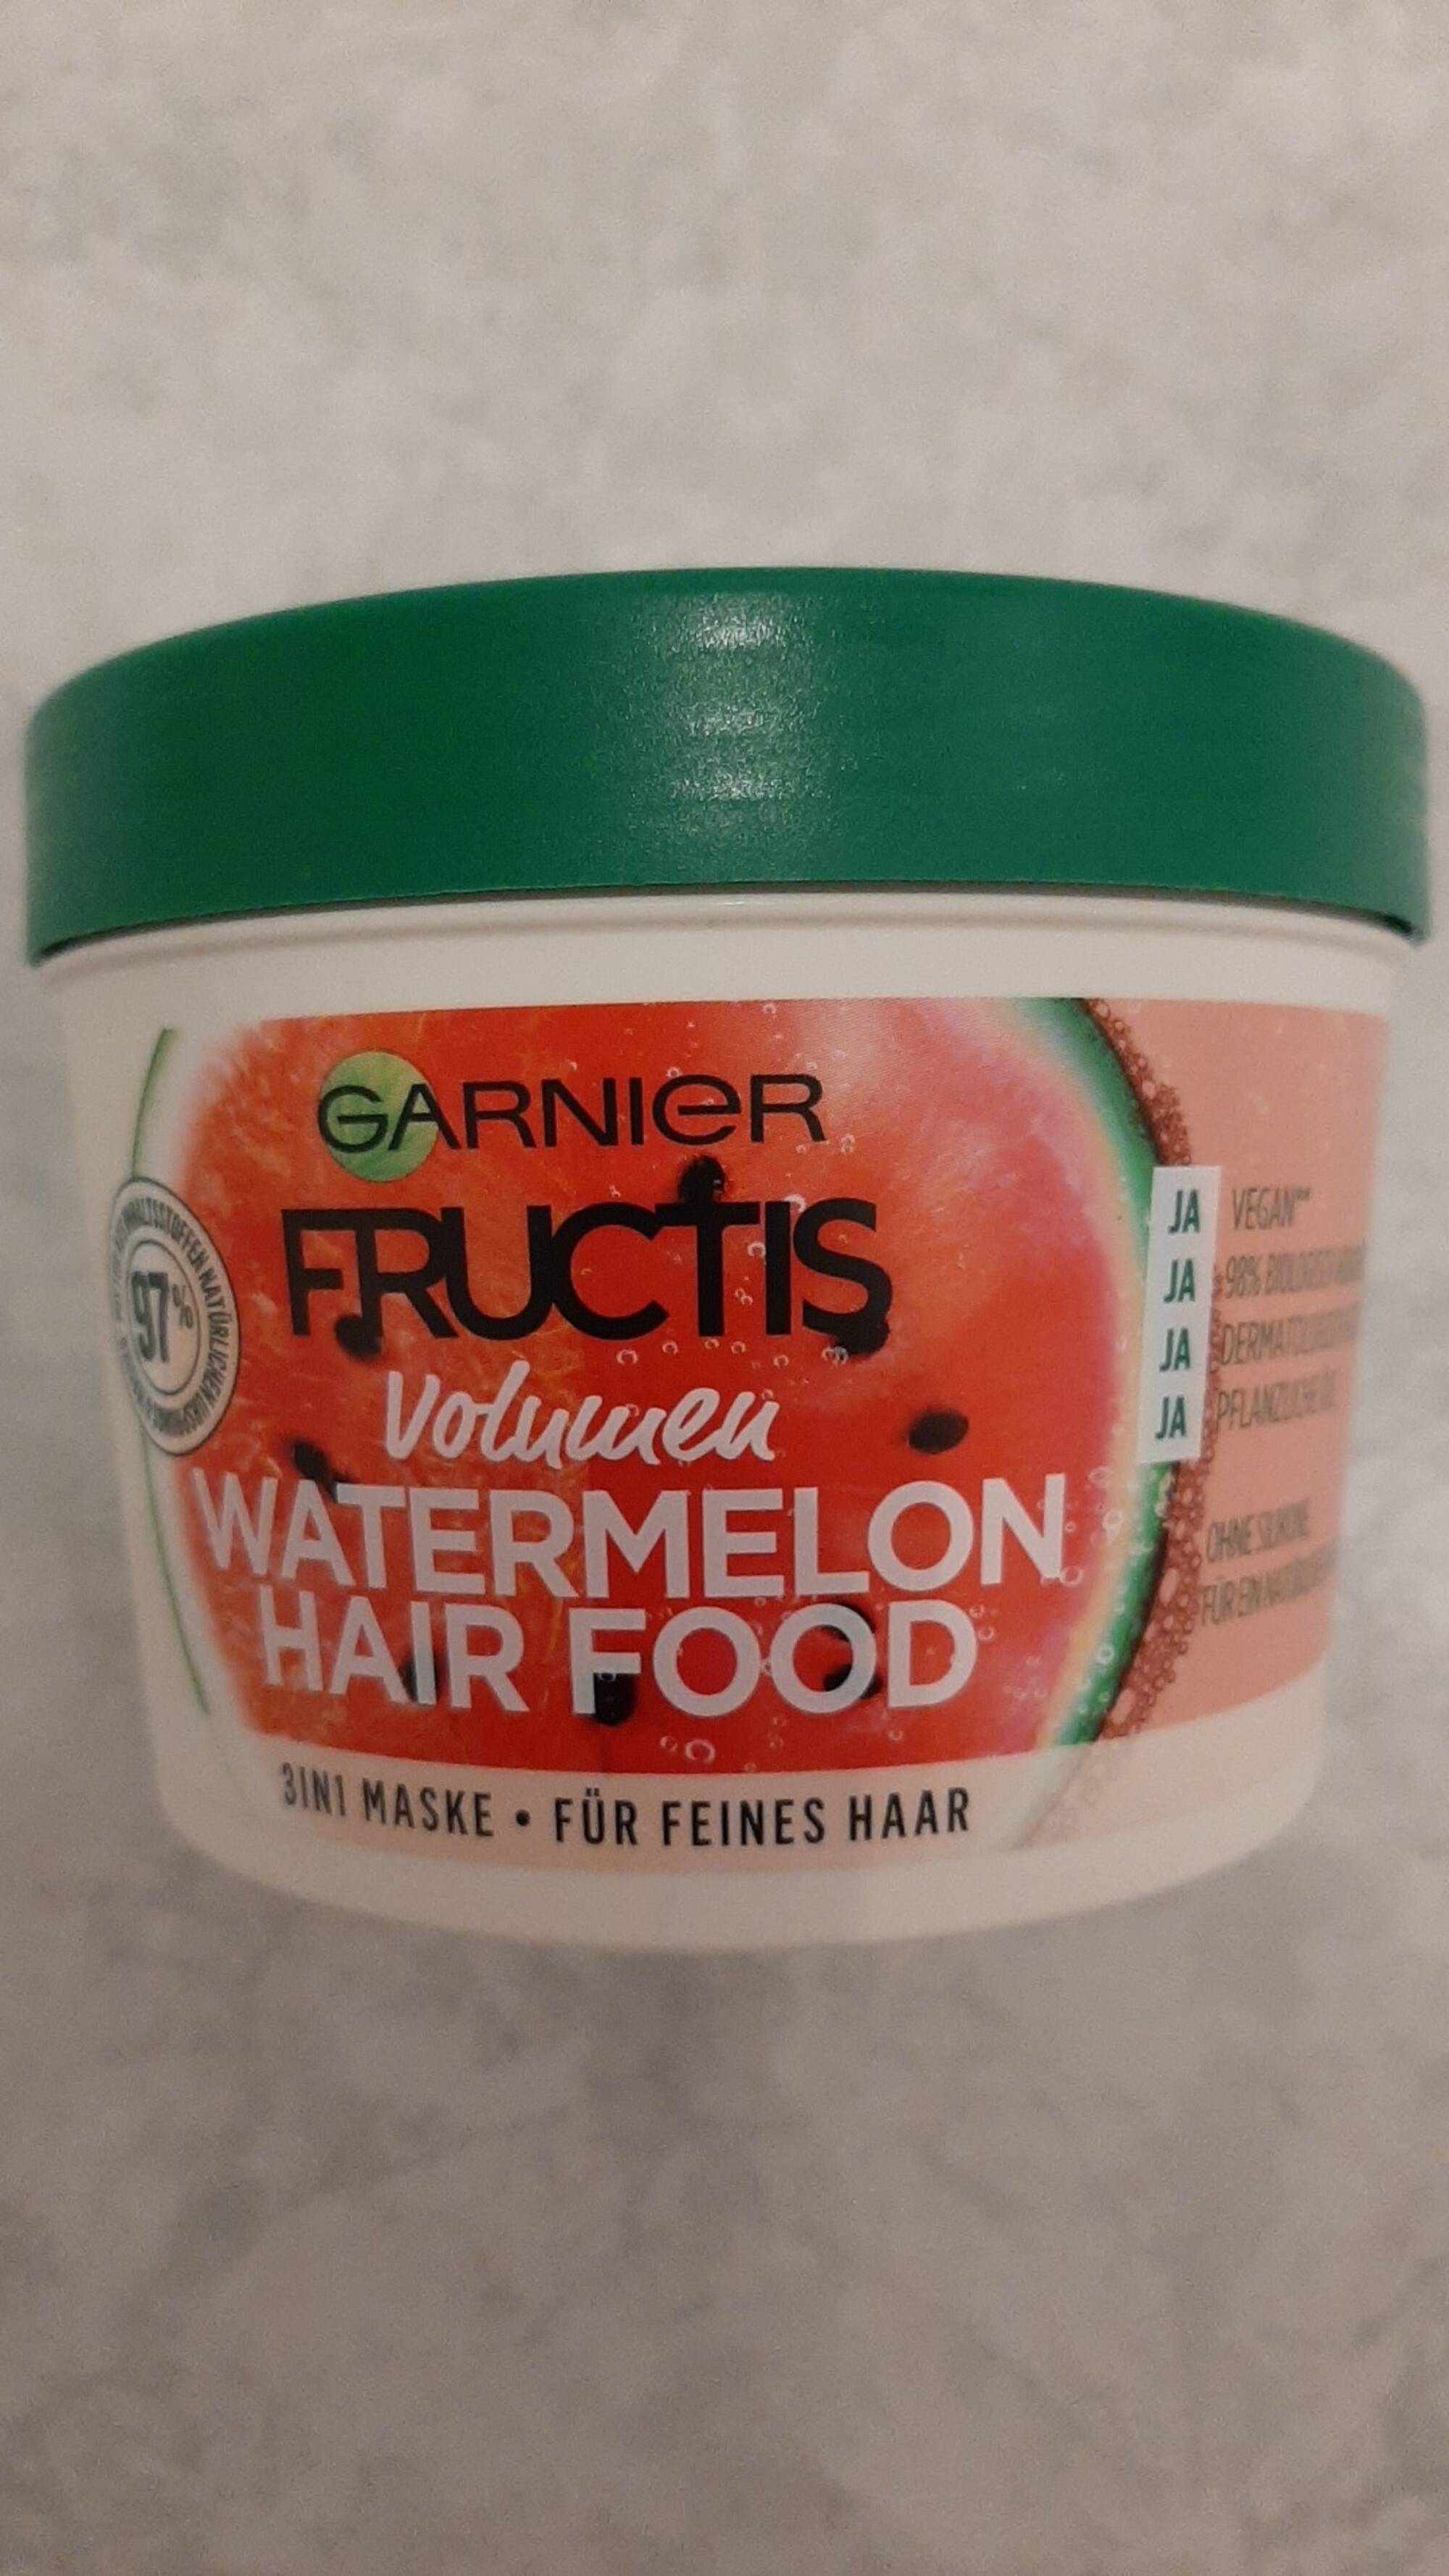 GARNIER - Fructis watermelon hair food - 3in1 Maske